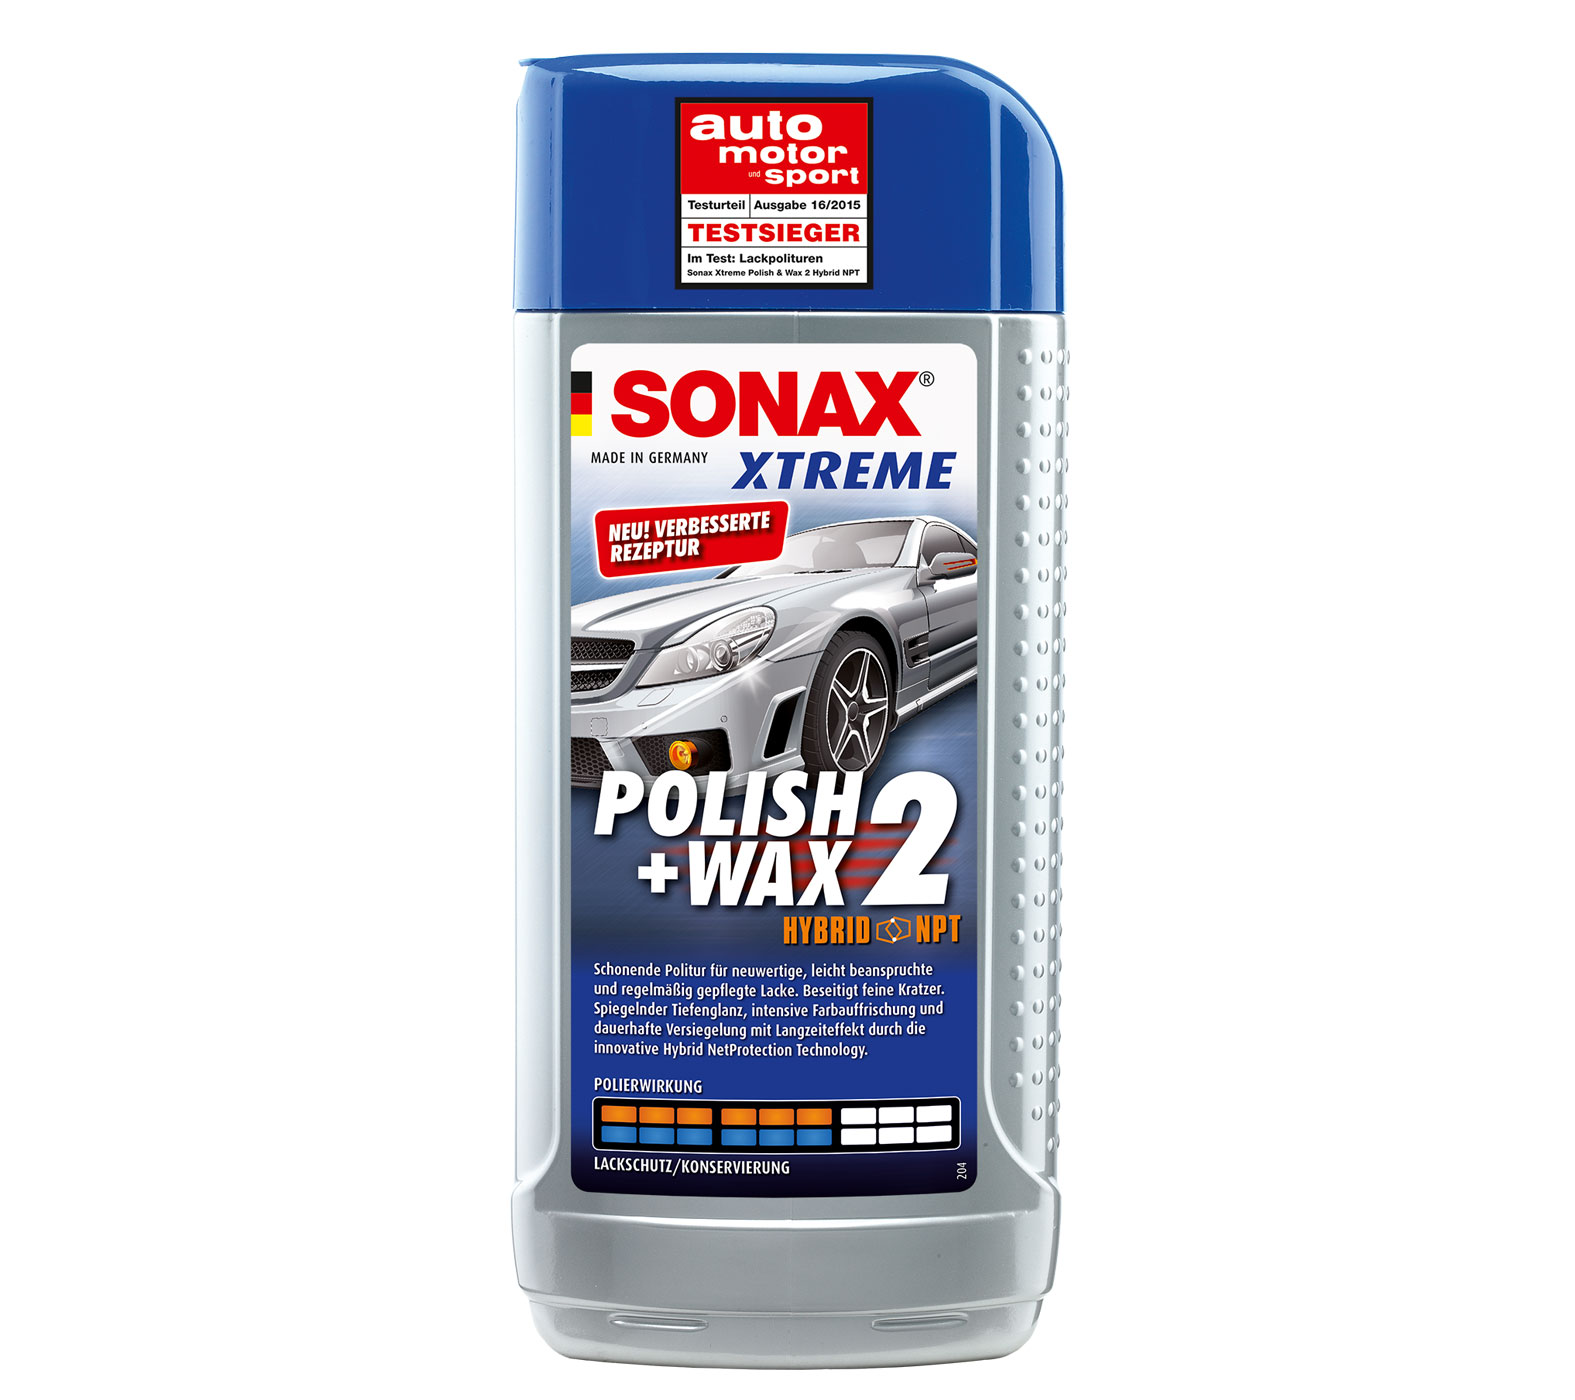 SONAX Xtreme Polish & Wax Hybrid NPT 2 500 ml